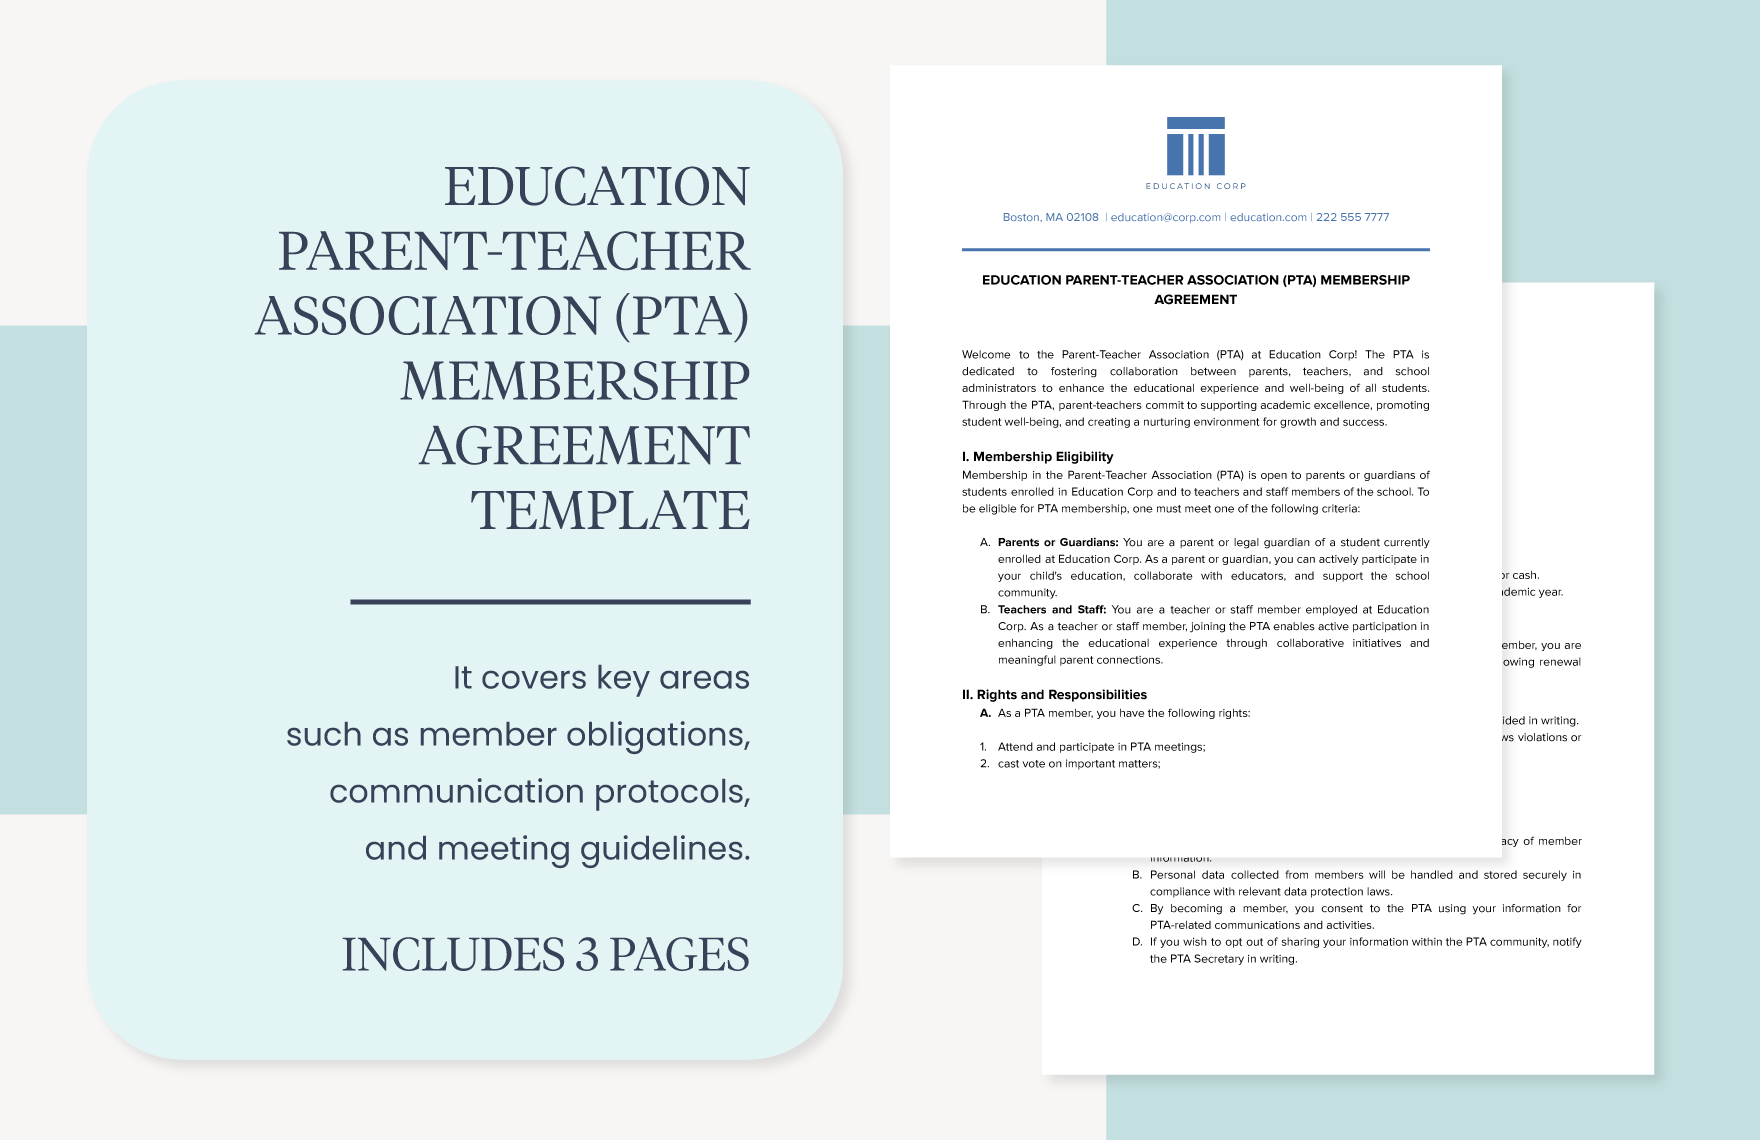 Education Parent-Teacher Association (PTA) Membership Agreement Template